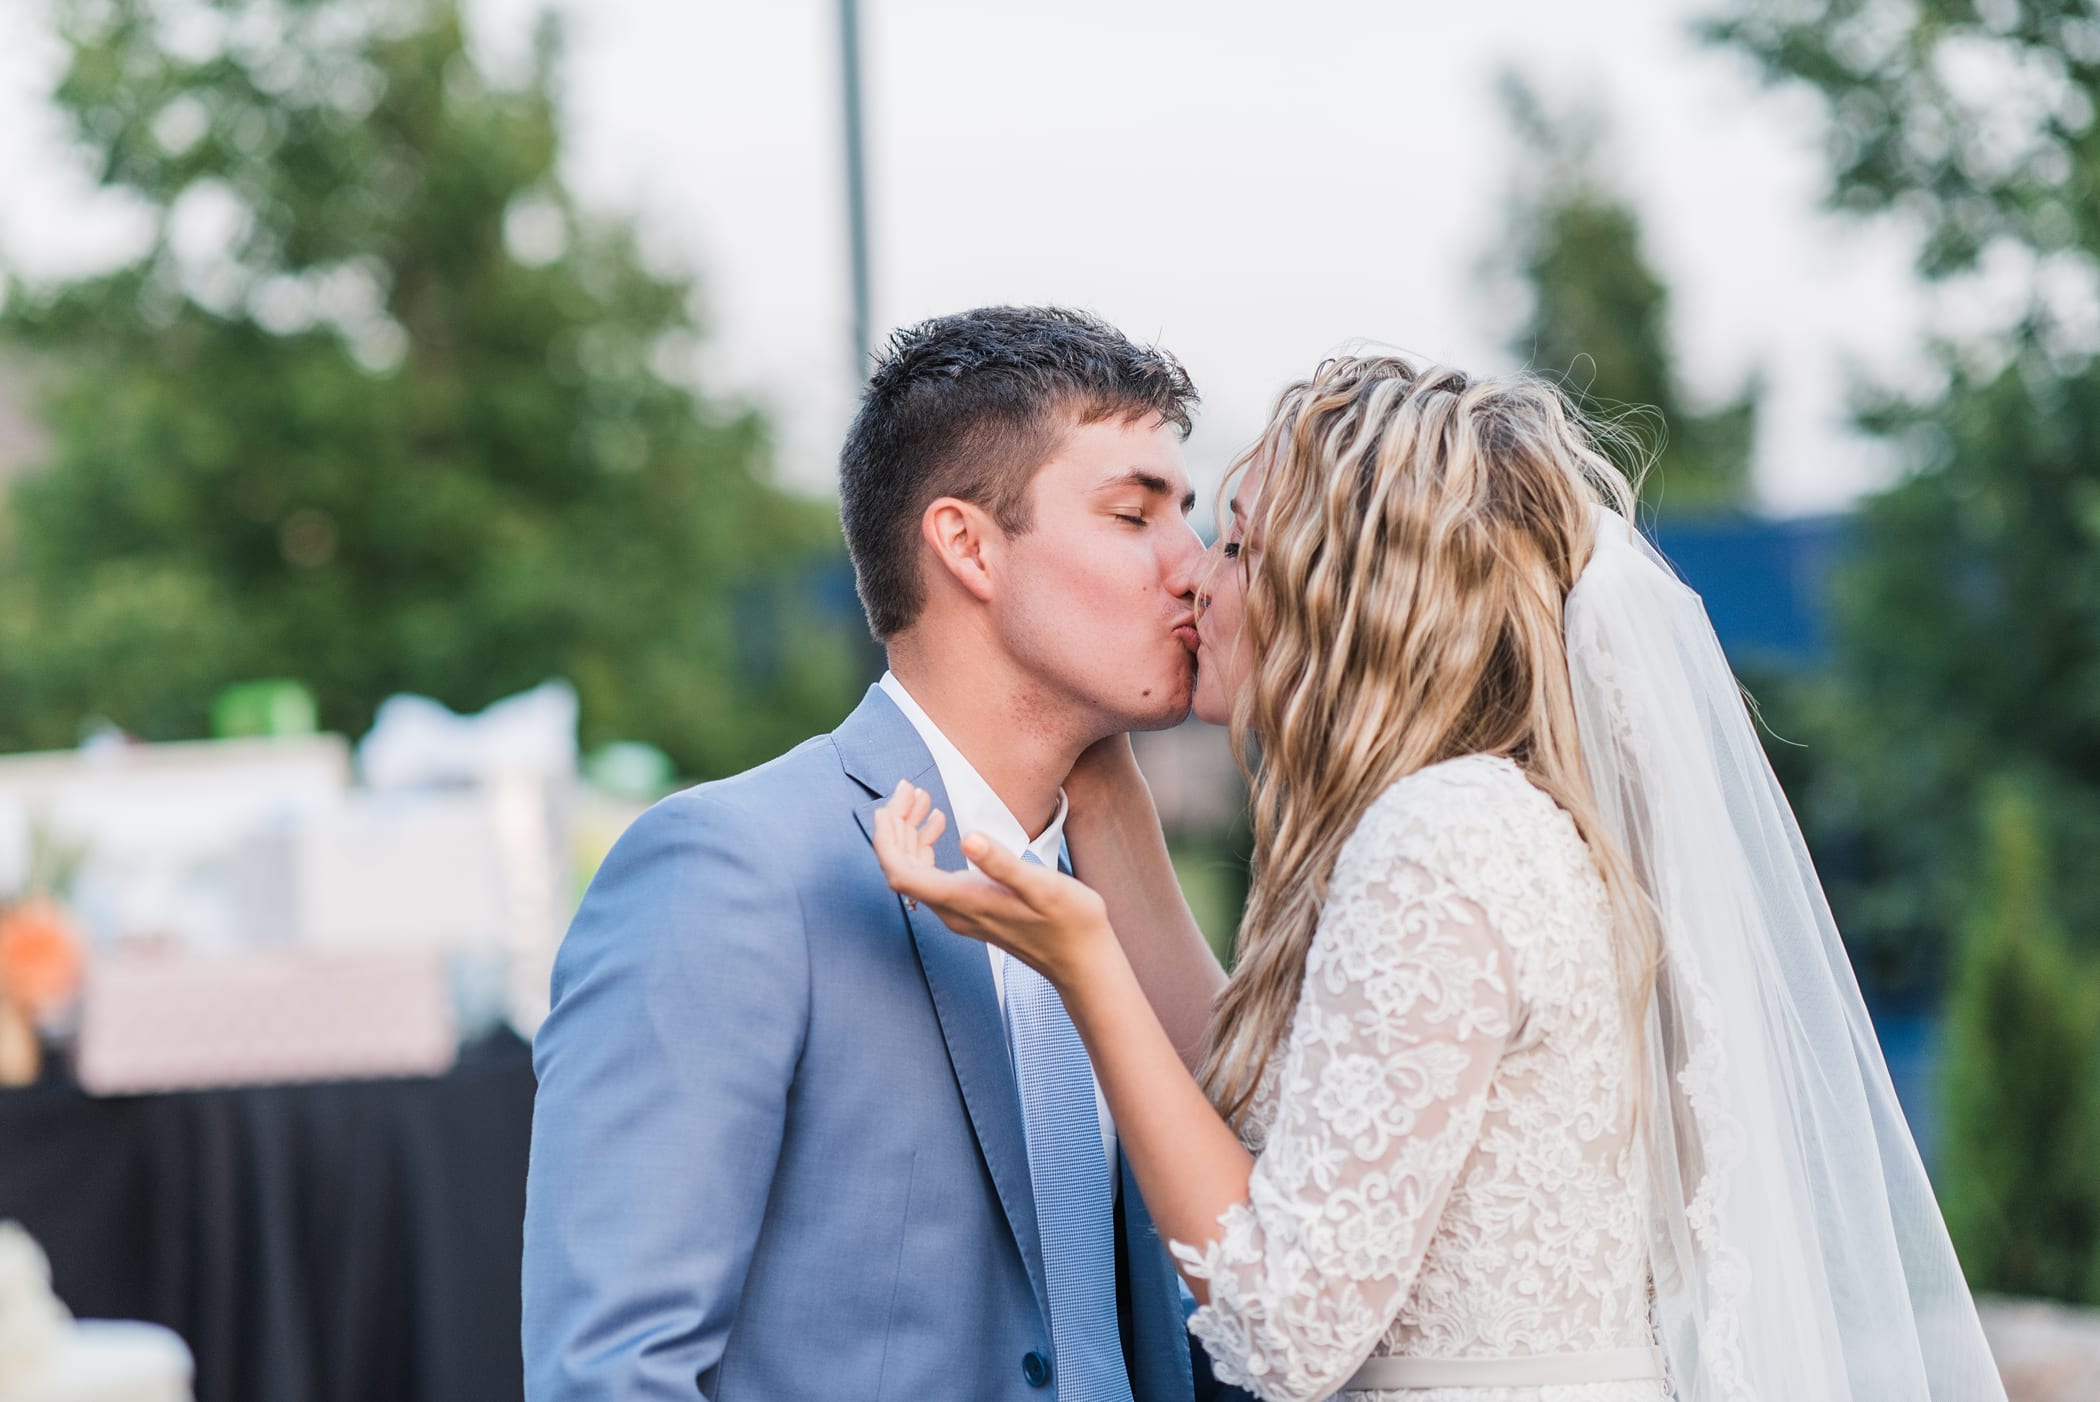 Idaho Summer wedding and outdoor reception | Idaho Falls LDS Temple | Dusty Blue and peach wedding | Michelle & Logan Photo & Films 